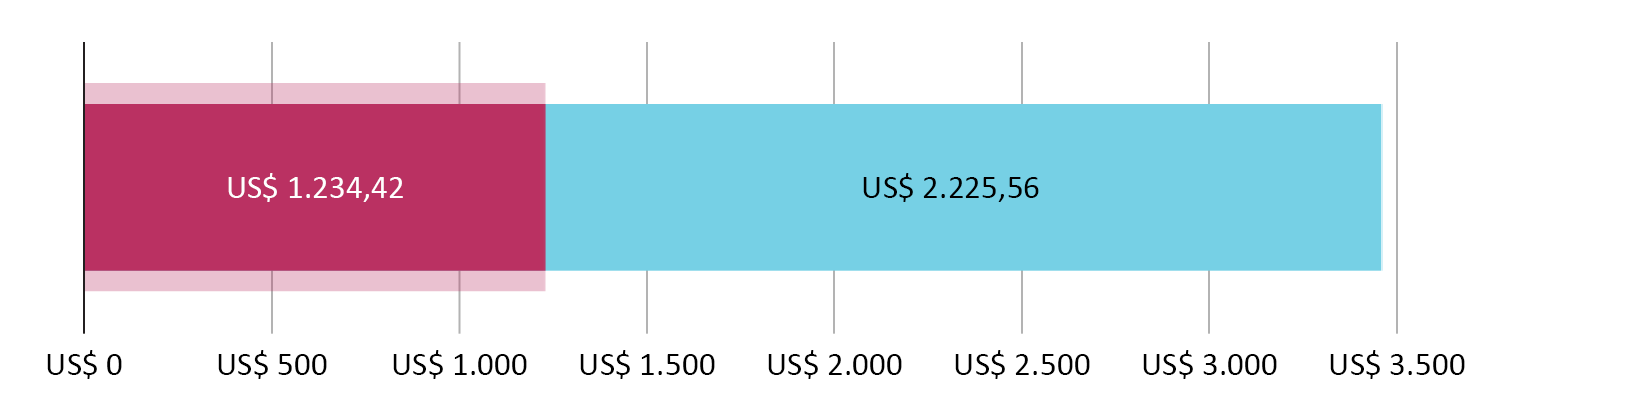 US$1.234,42 gastos; US$2.225,56 restantes